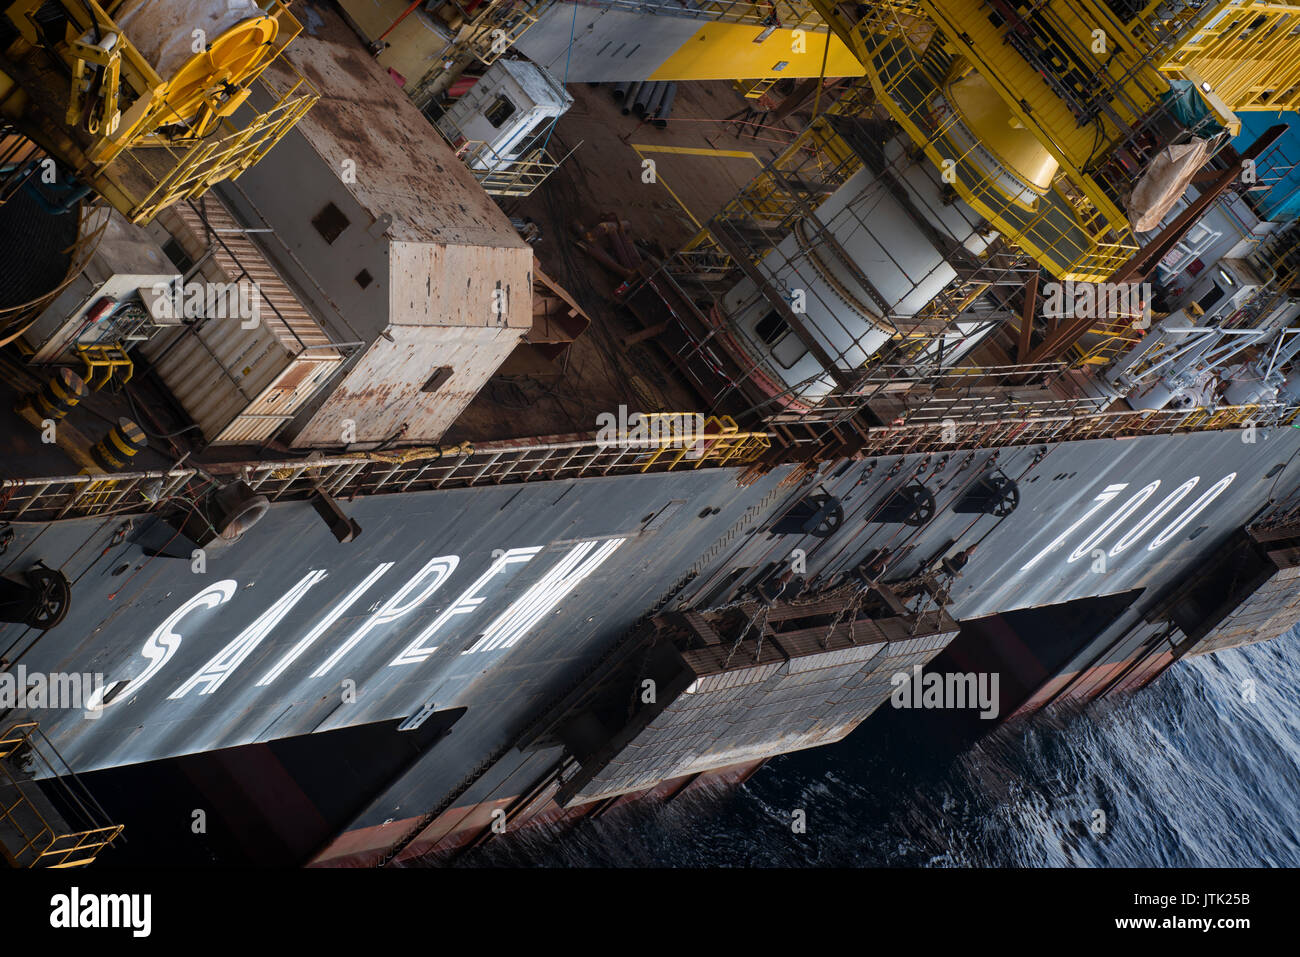 La Saipem 7000 sollevamento pesante nave. Credito: lee ramsden / alamy Foto Stock